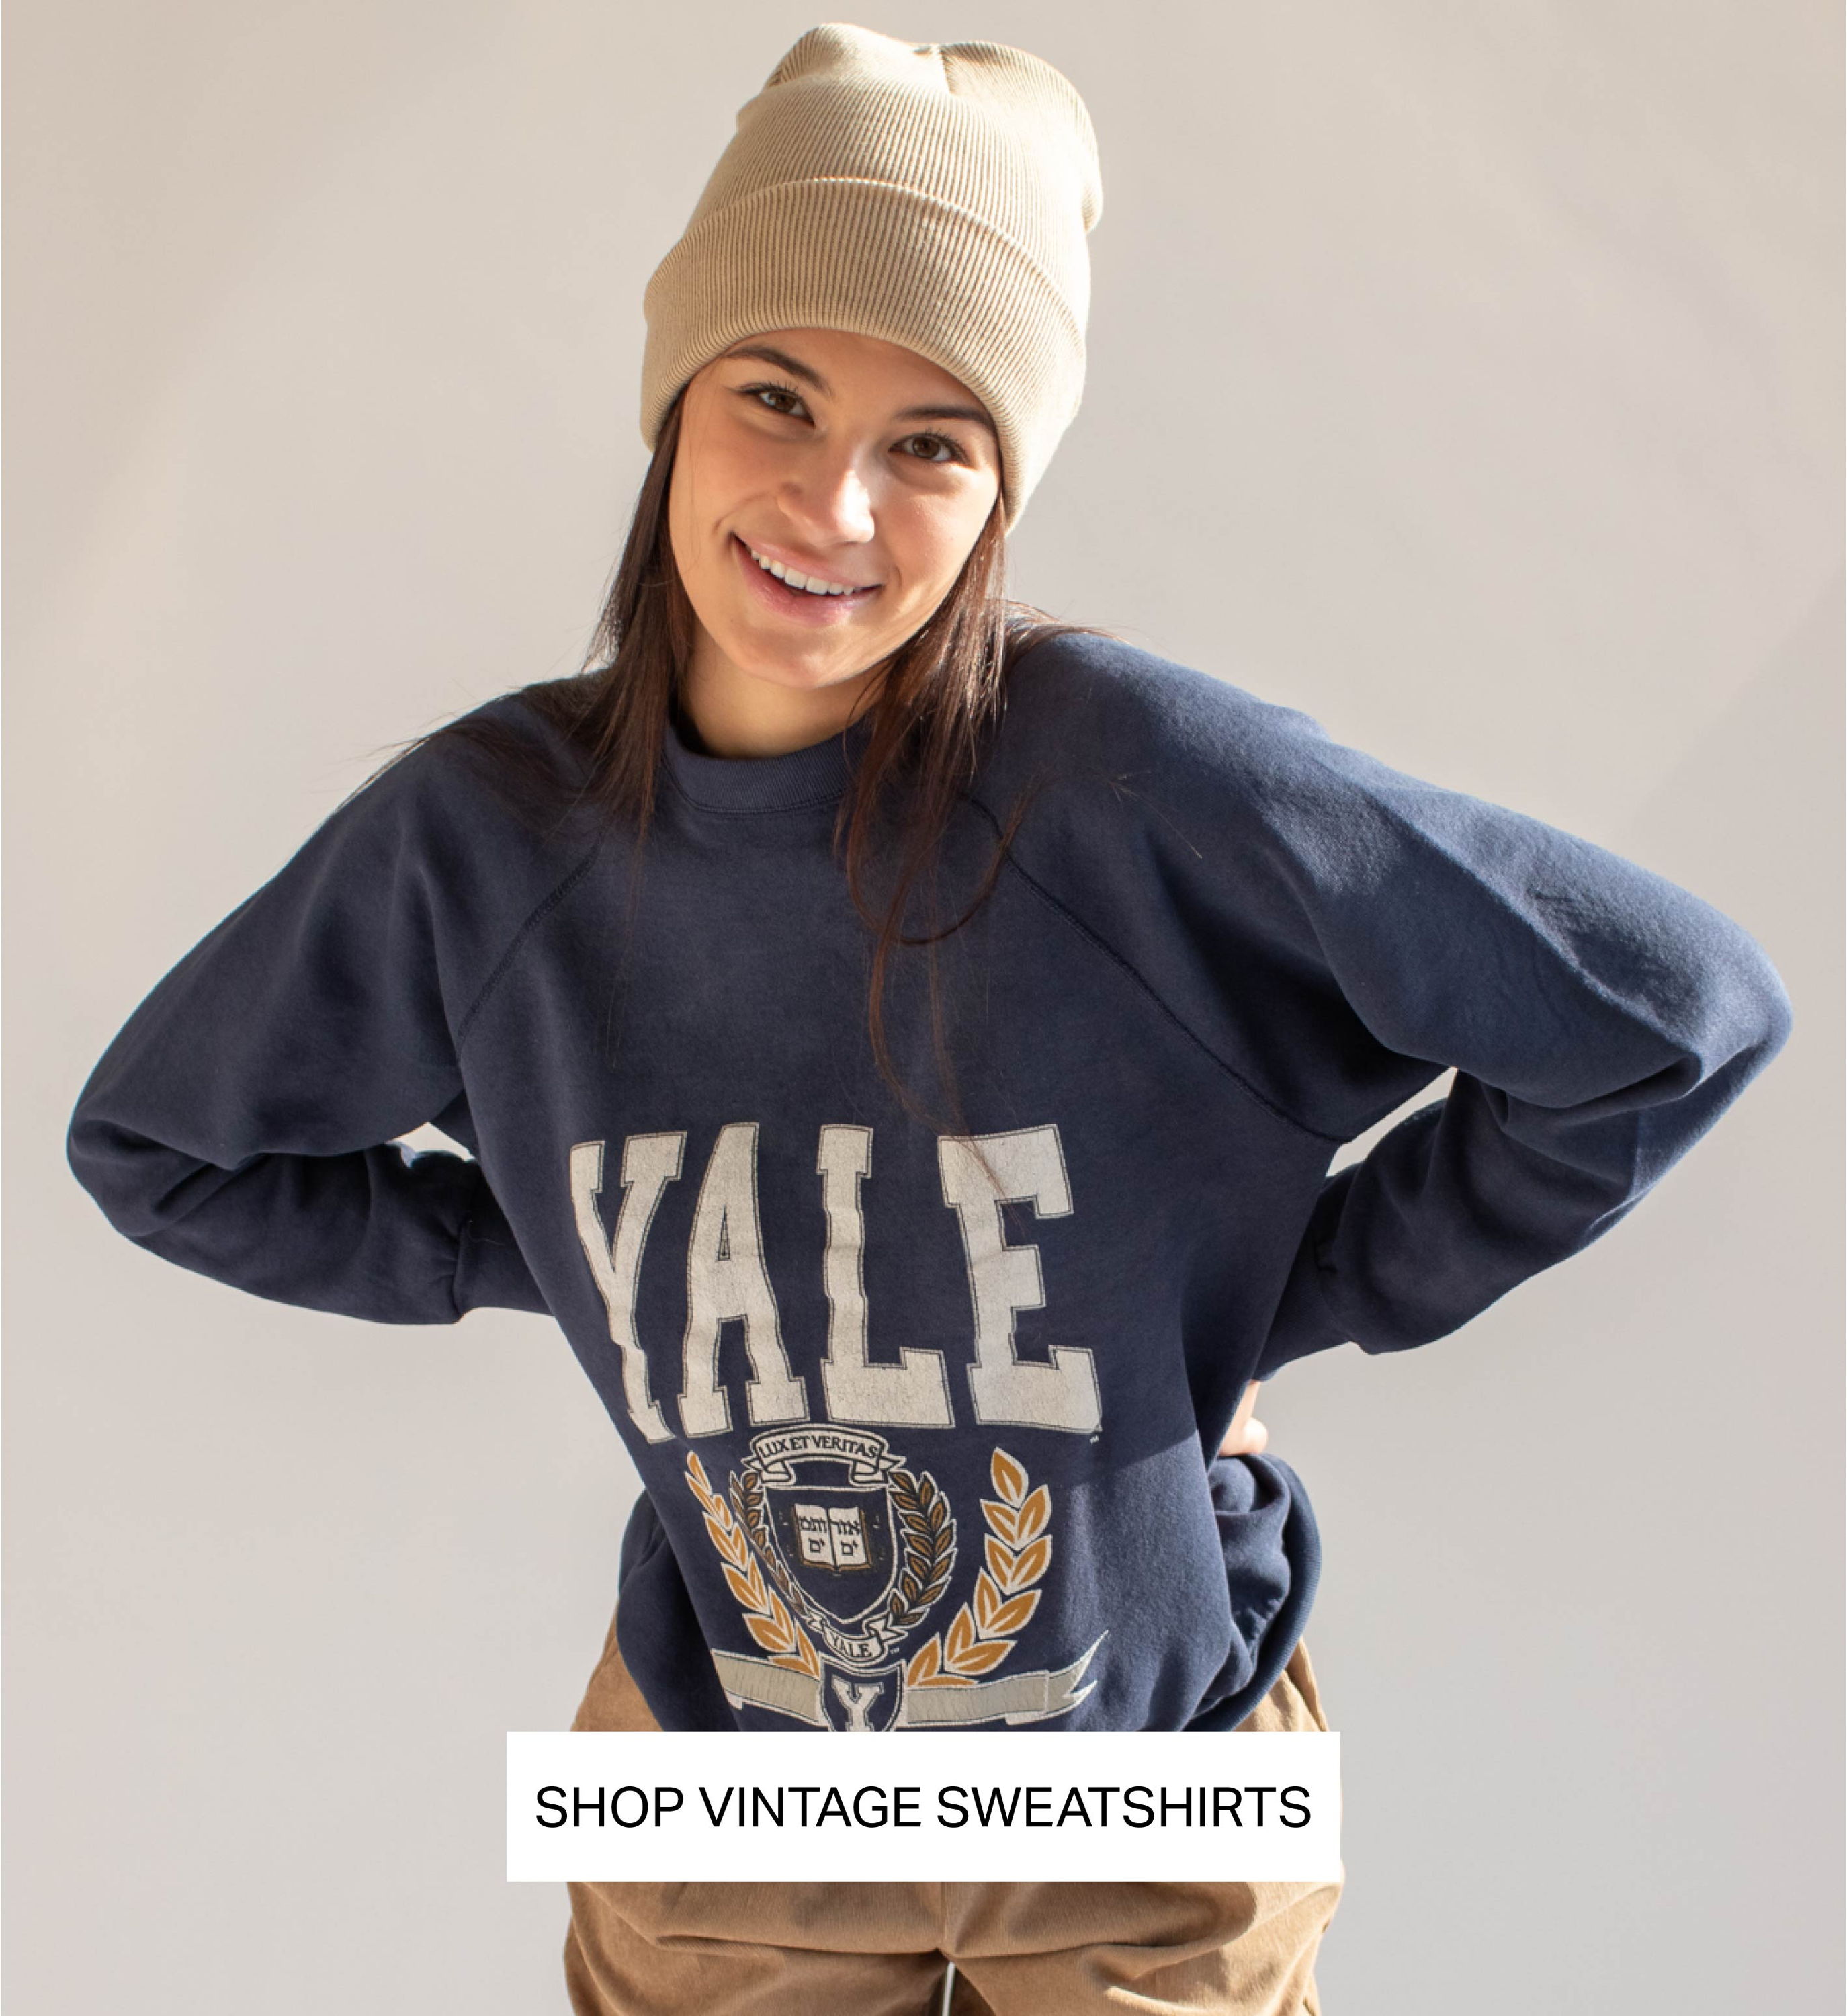 Shop Vintage Sweatshirts